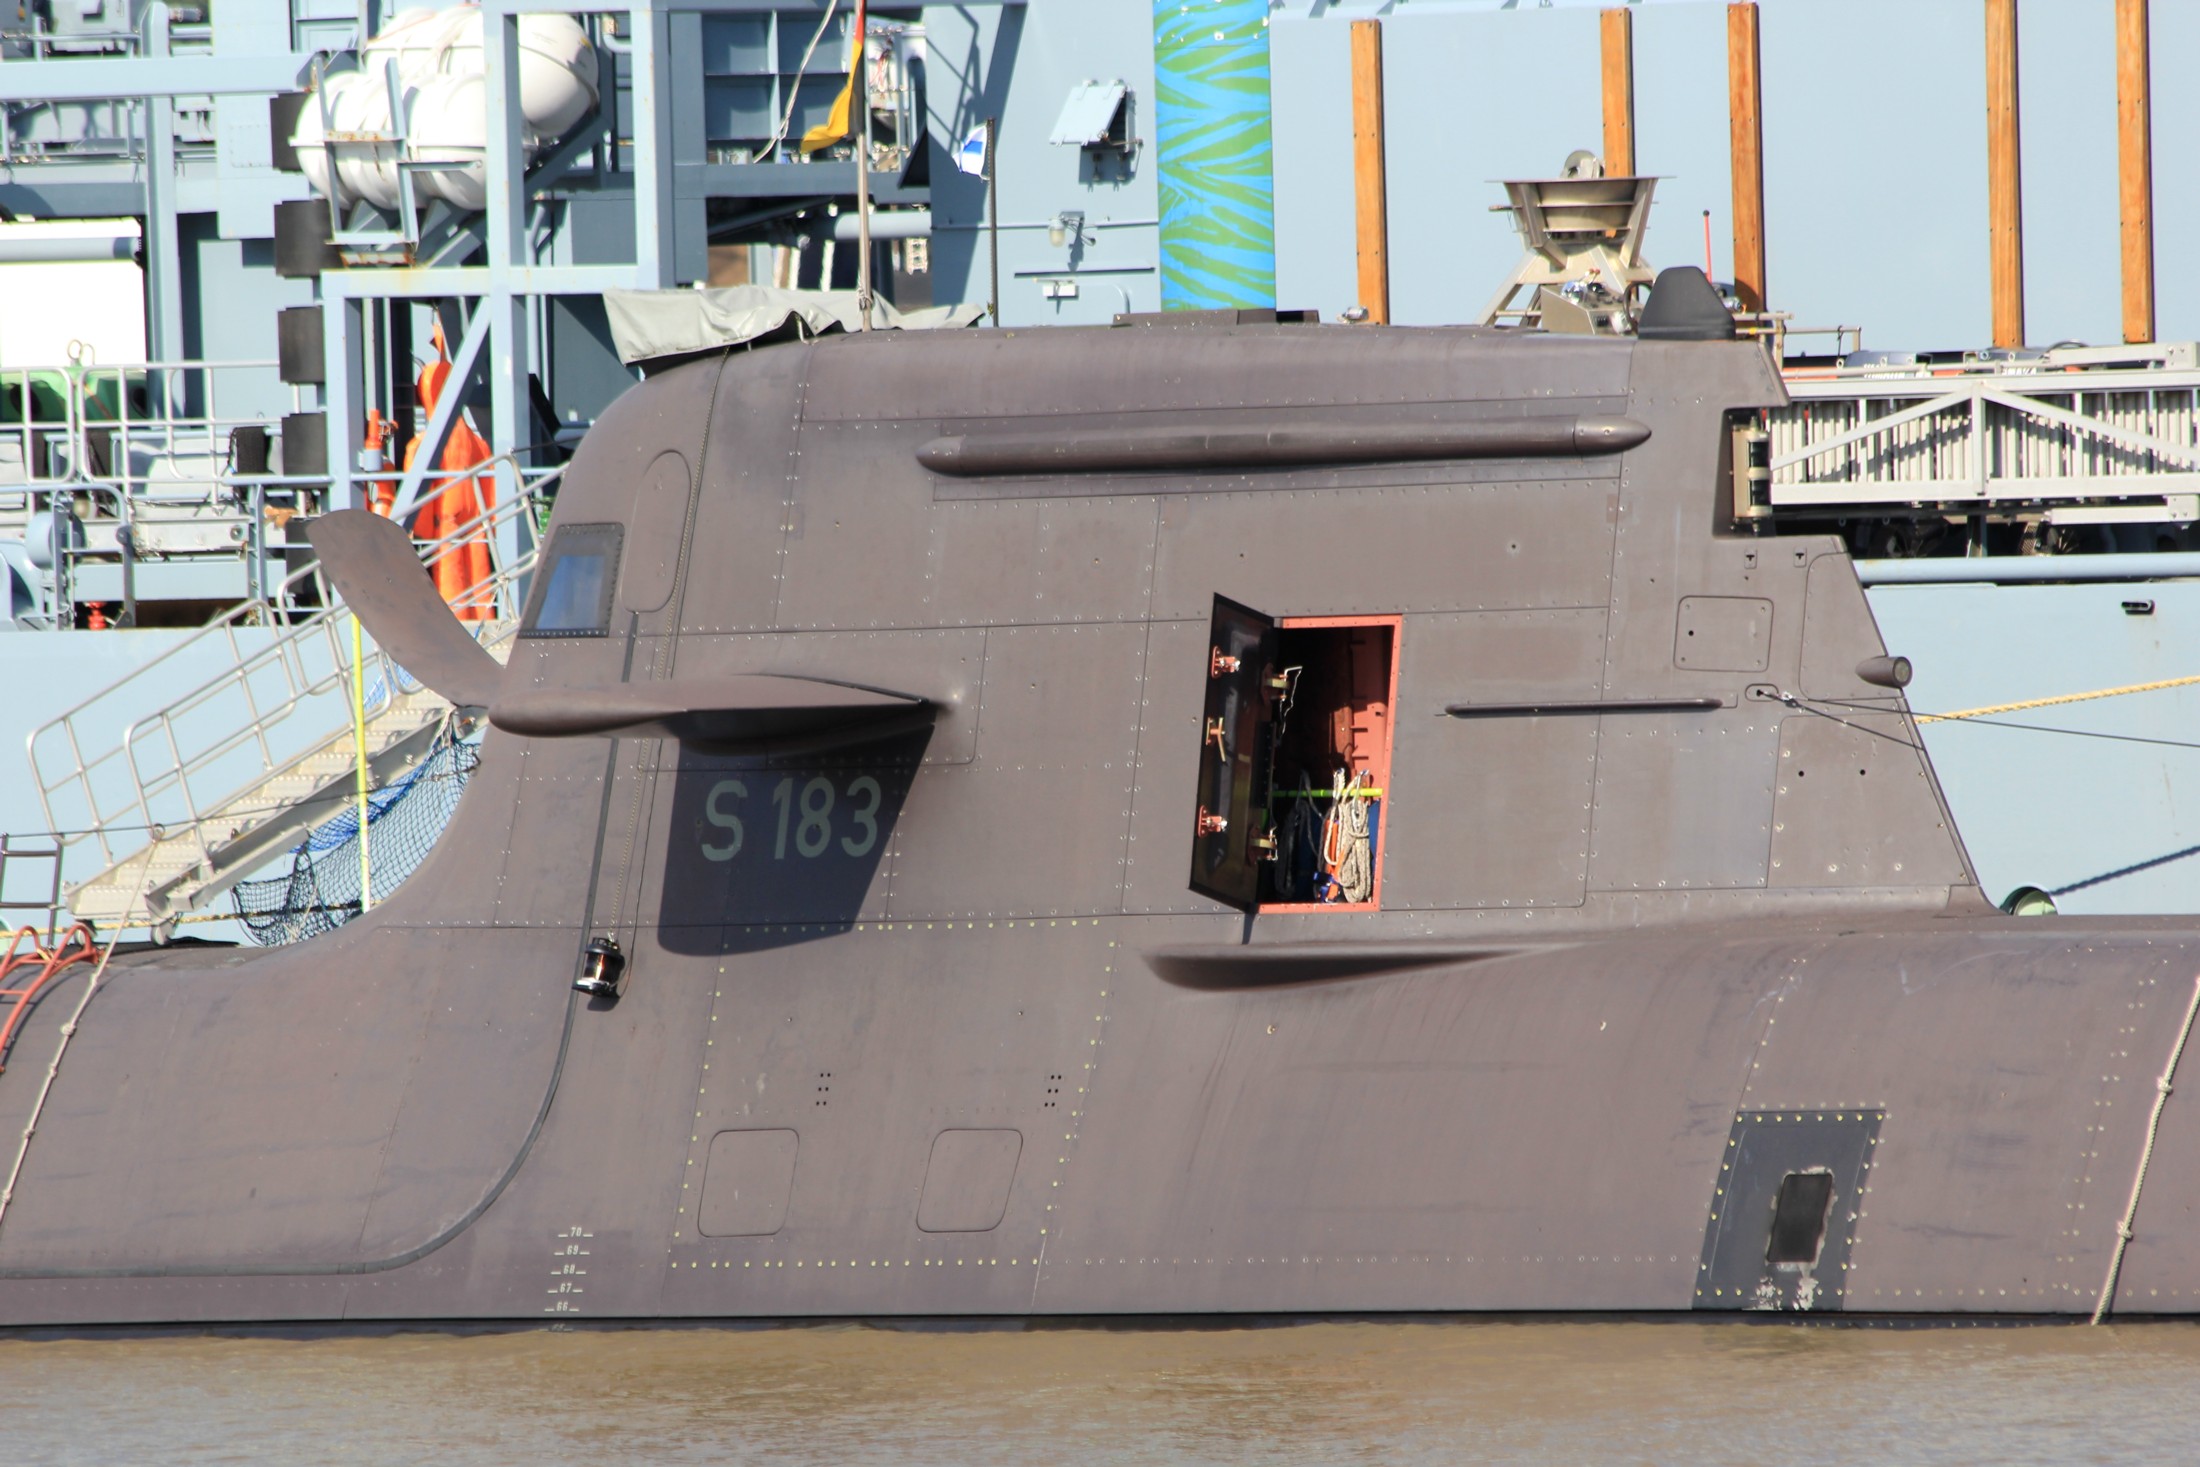 s-183 fgs u33 type 212a class submarine german navy 10